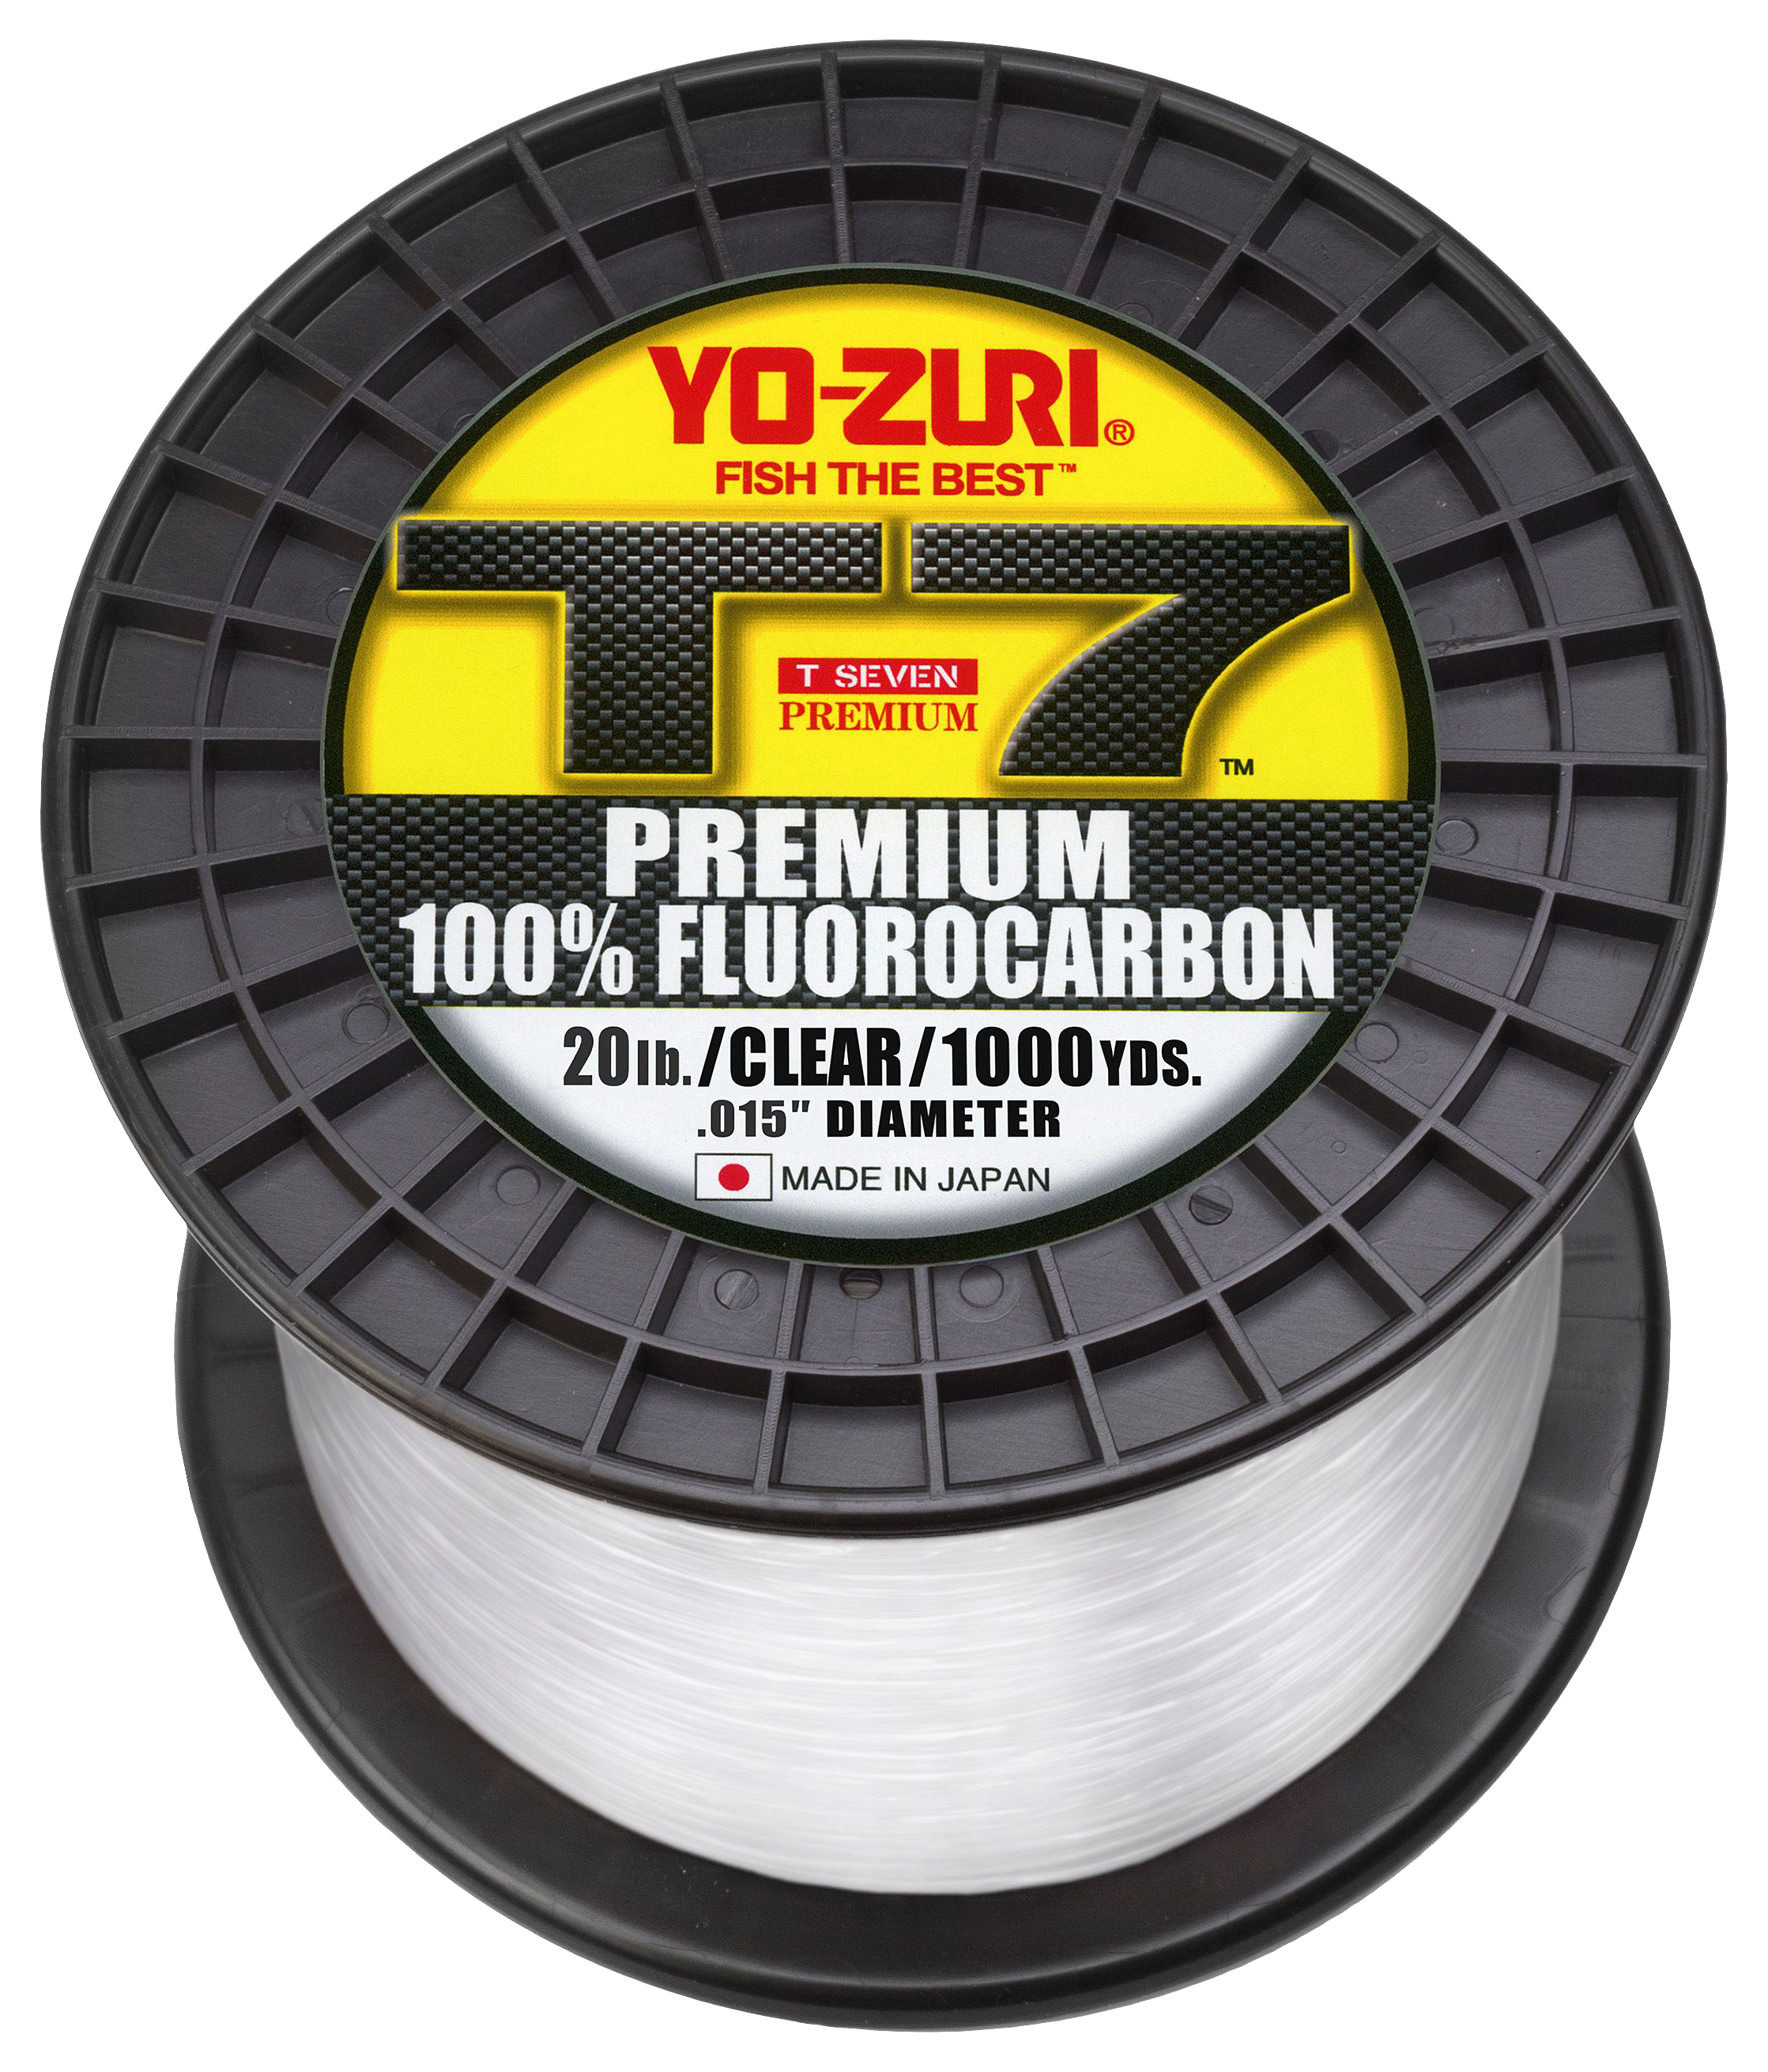 Yo-Zuri T-7 Premium Fluorocarbon 200 Yards 16lb